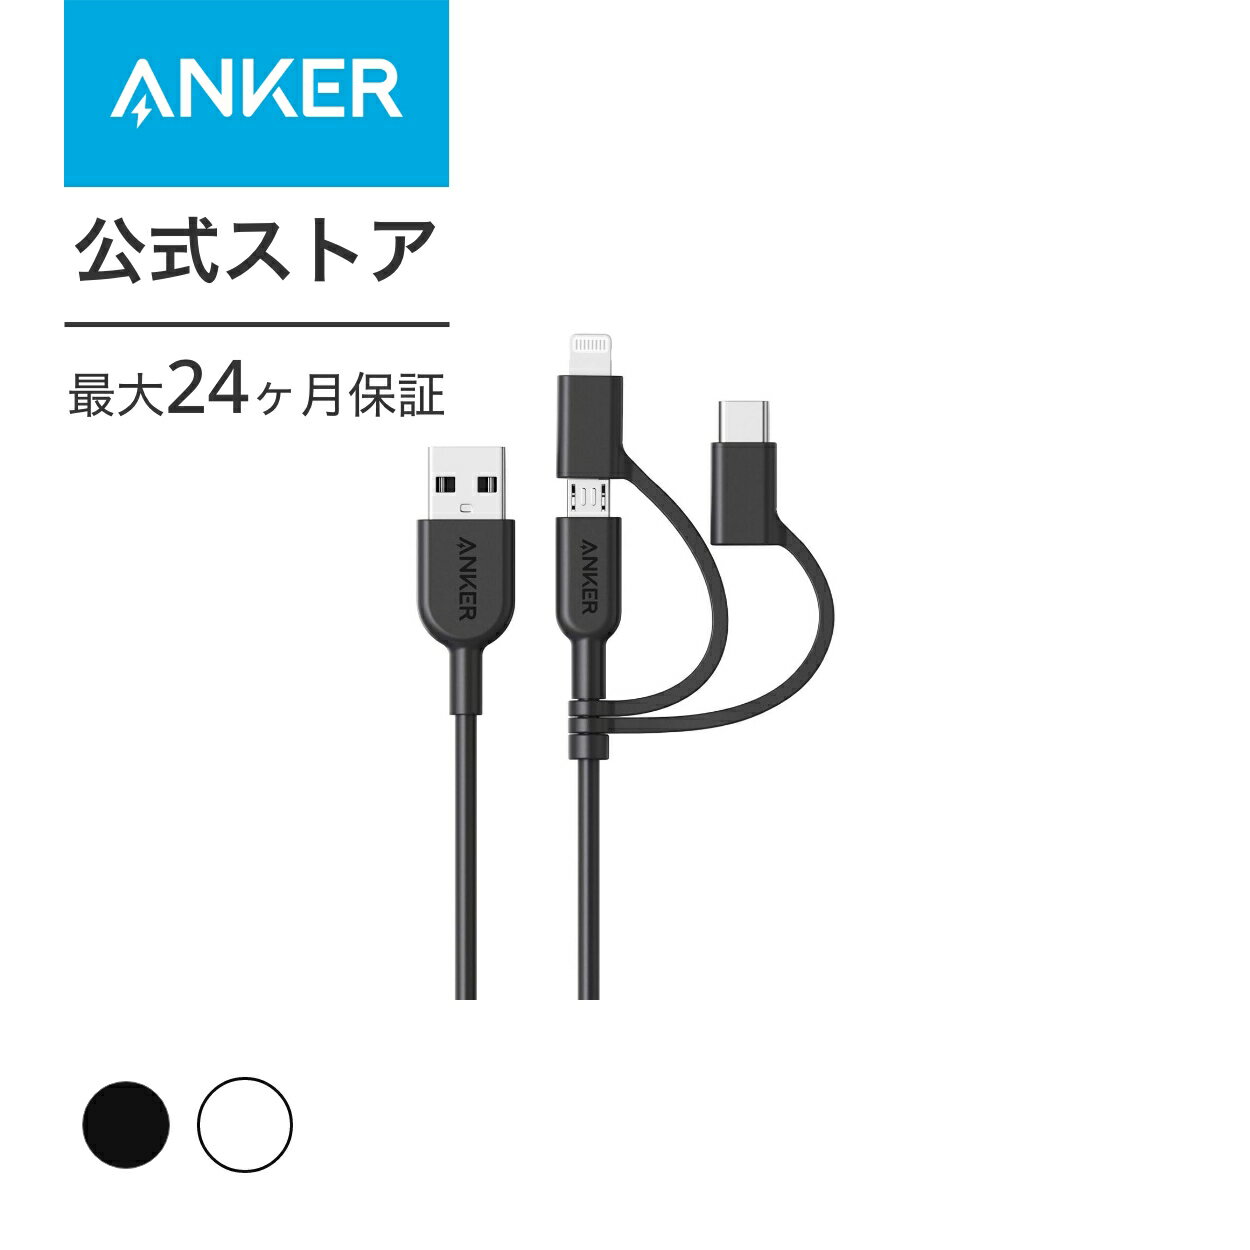 Anker PowerLine II 3-in-1 ケーブル ライトニングUSB/USB-C/Micro USB端子対応ケーブル 【Apple MFi認証取得】iPhone XS/XS Max/XR 対応 0.9m ブラック・ホワイト 